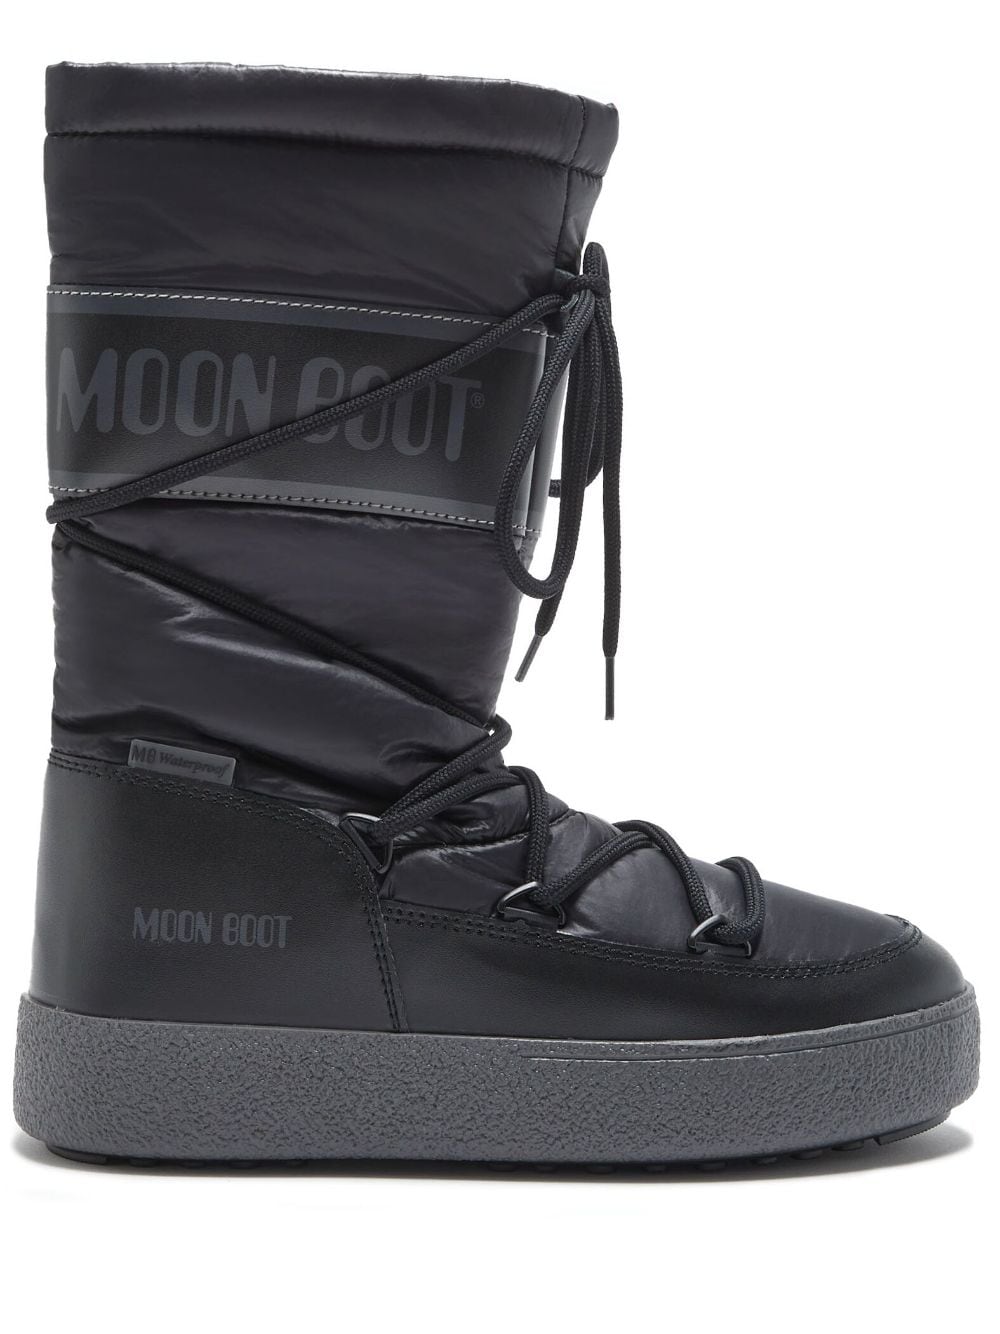 Moon Boot LTrack High boots - Black von Moon Boot